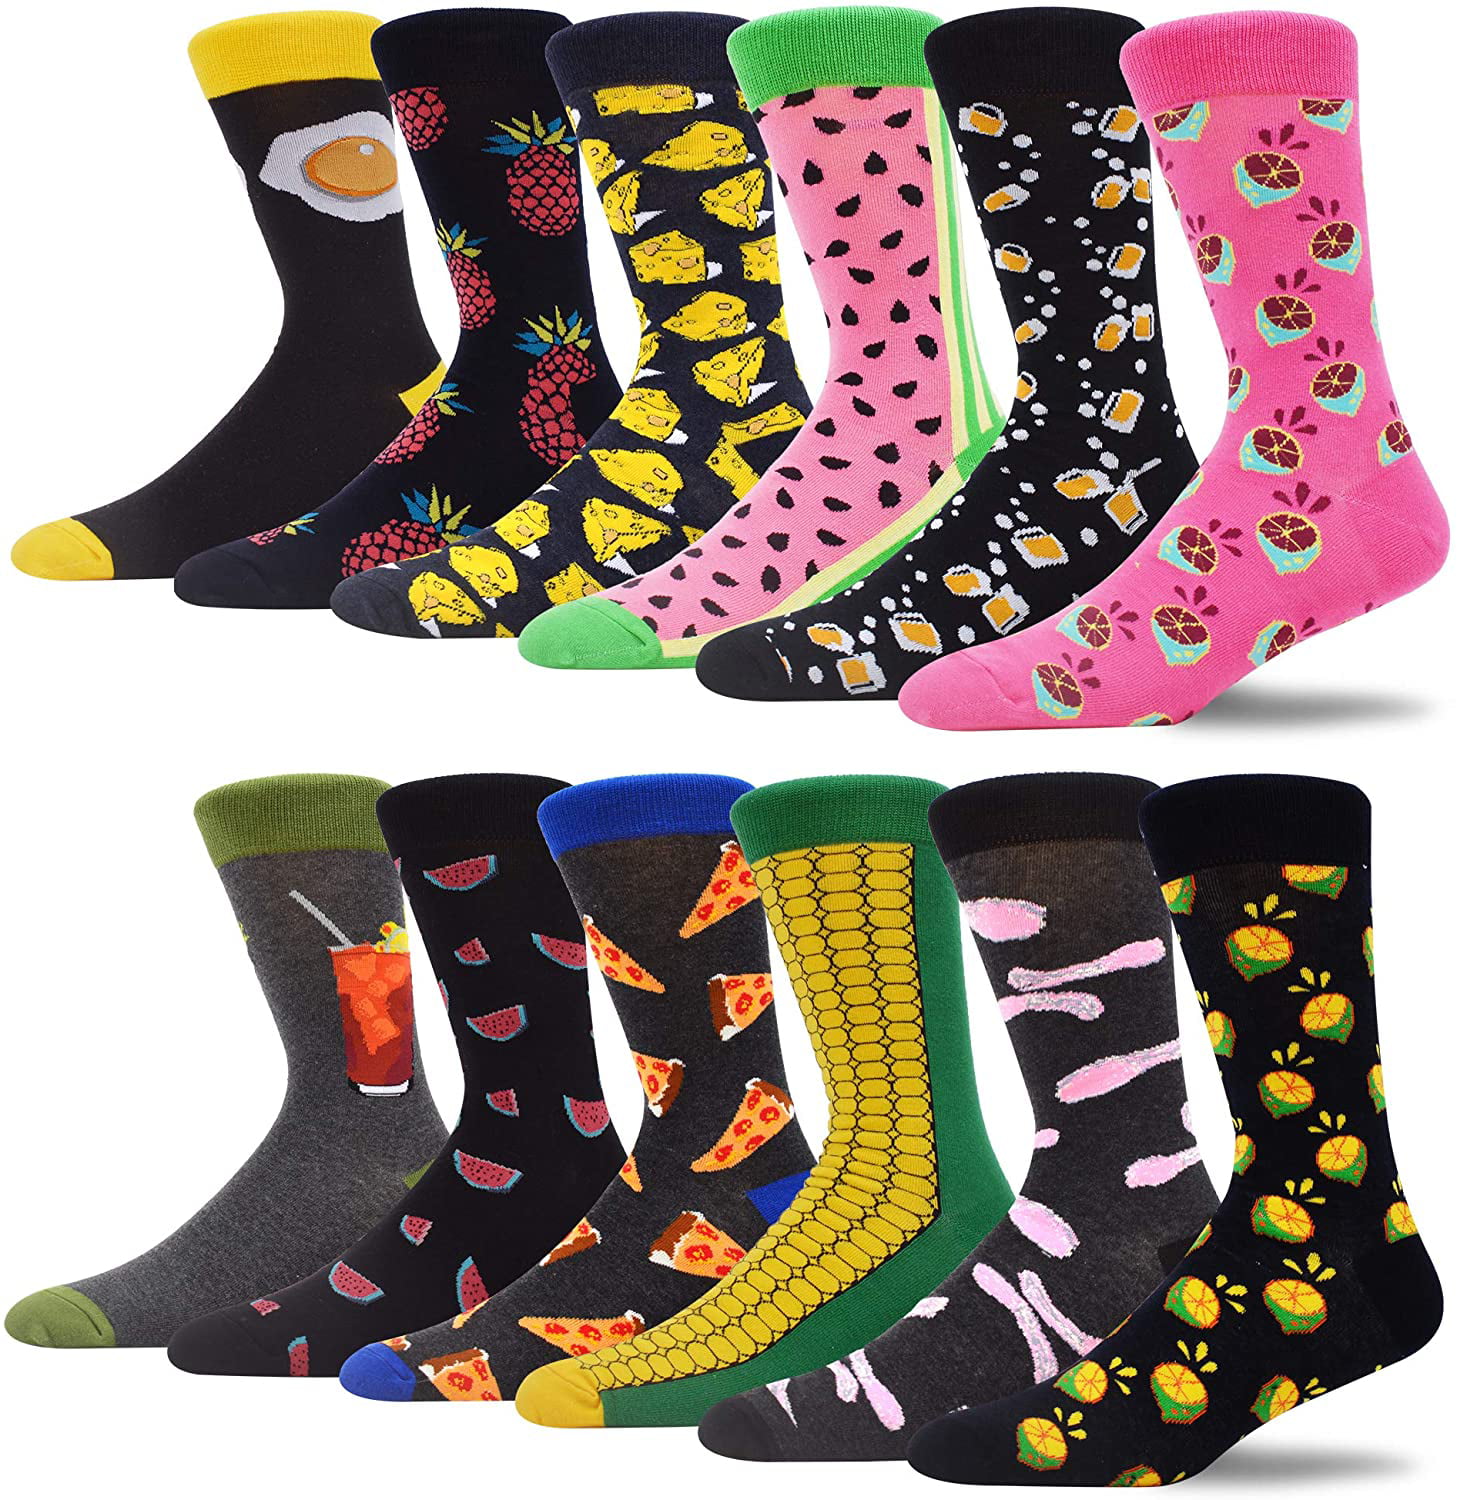 MAKABO Mens Fun Dress Socks Colorful Funny Novelty Casual Cute Crew Socks Packs 